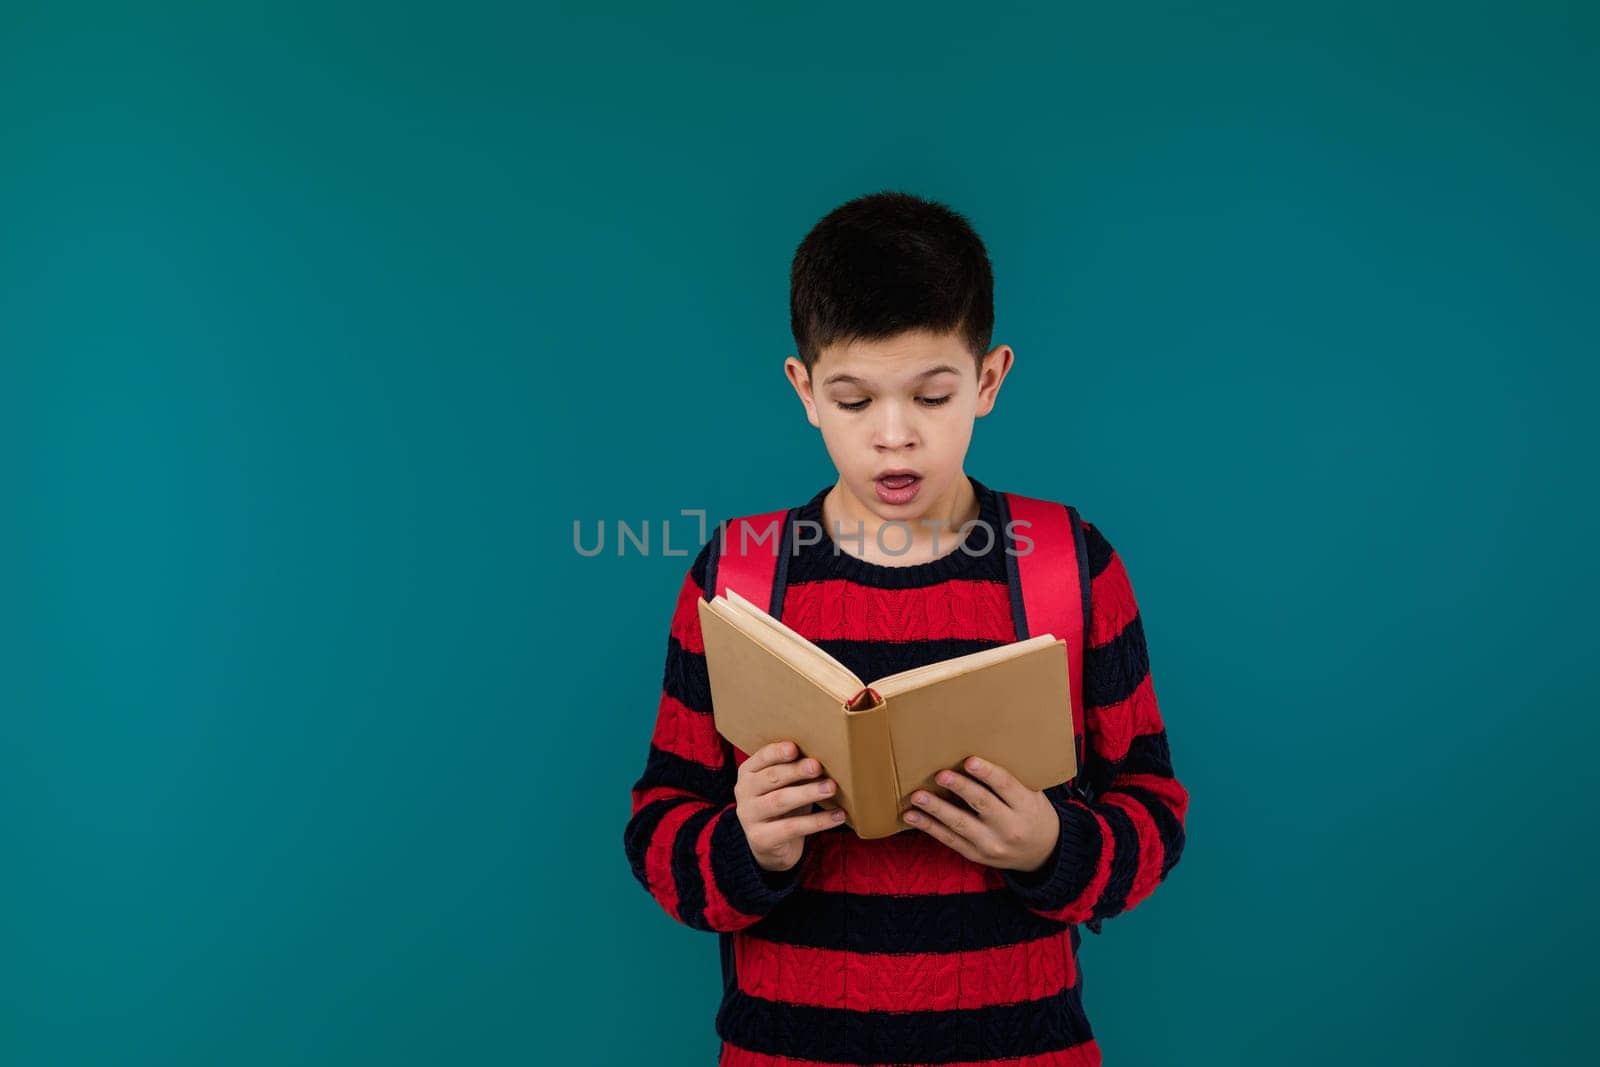 little cheerful school boy with book by erstudio